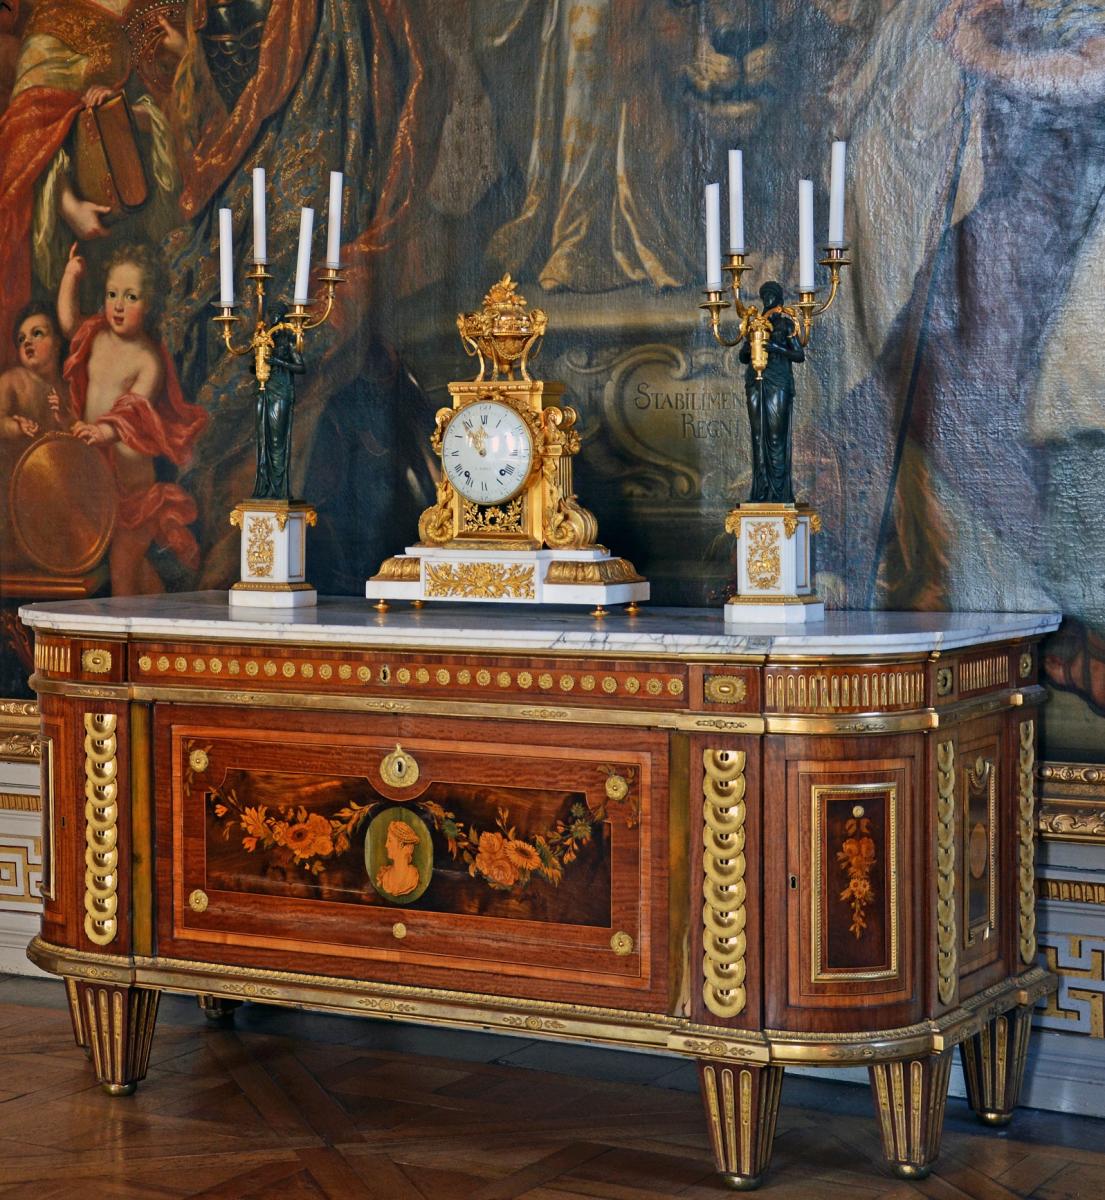 Drottningholm Palace in Ehrenstrahl Salon